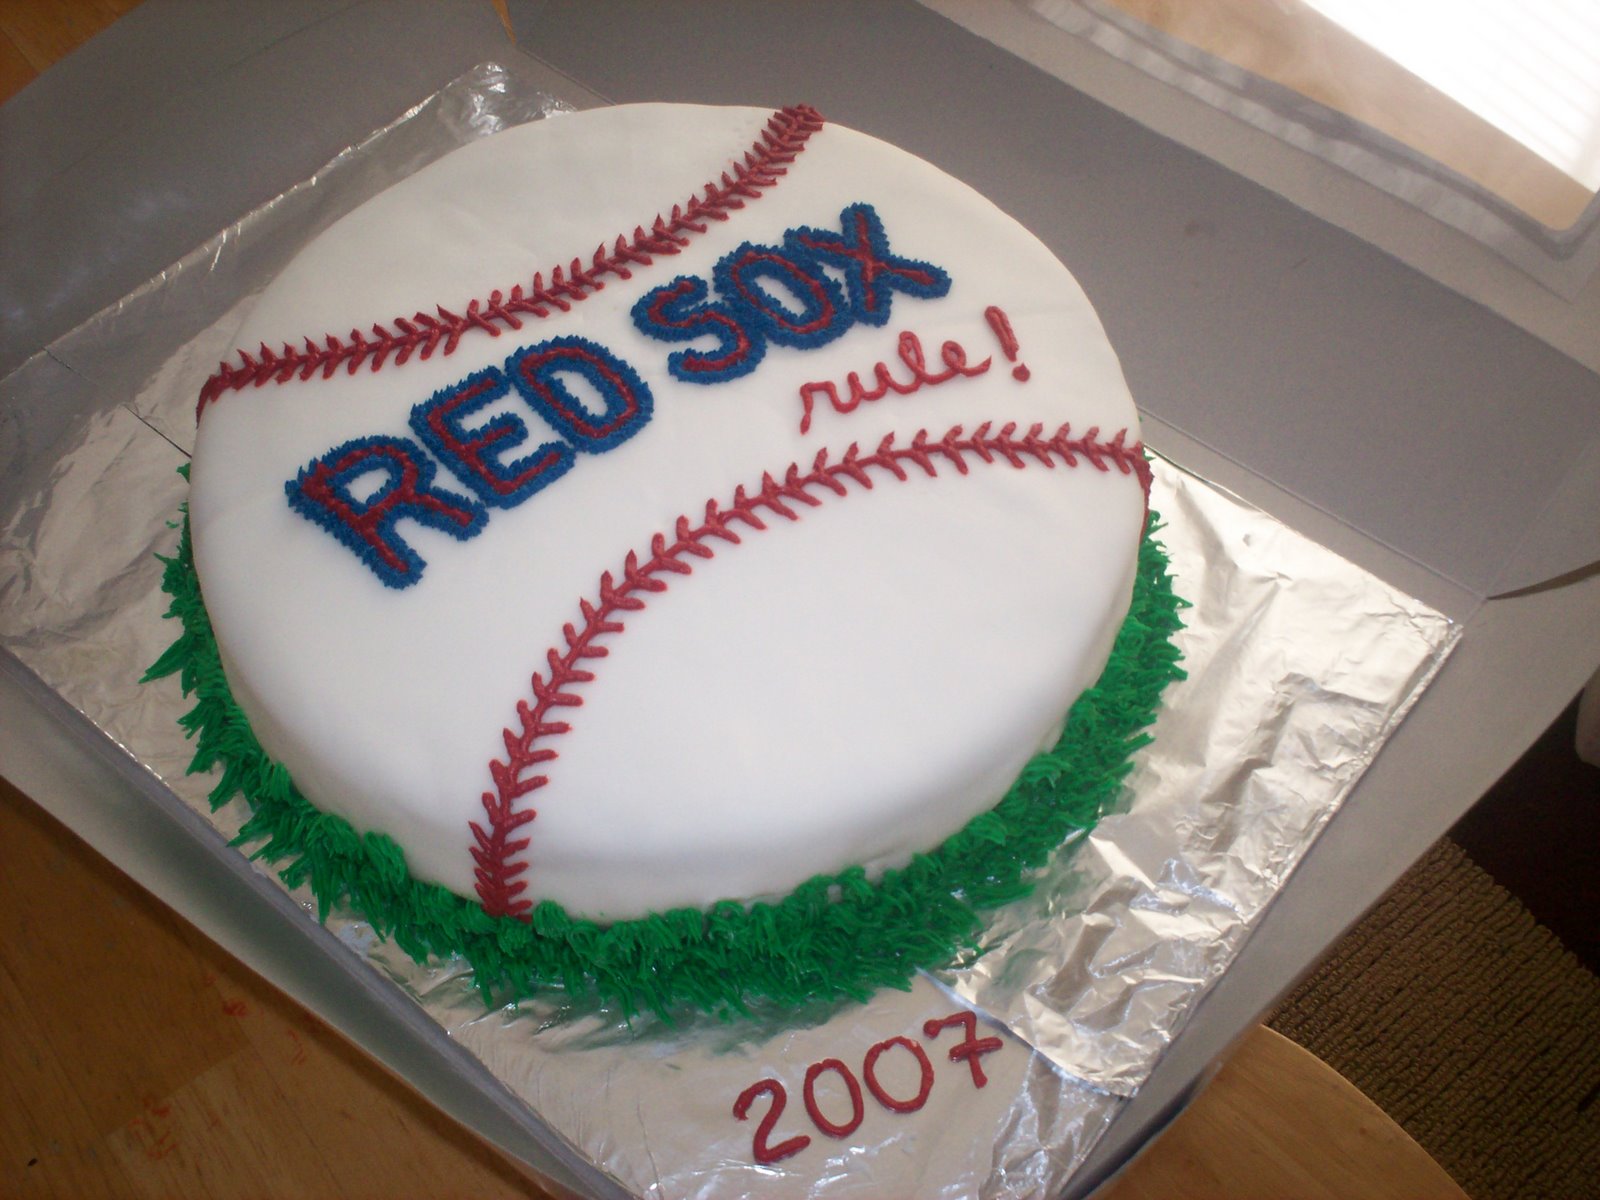 My son's baseball team championships cake